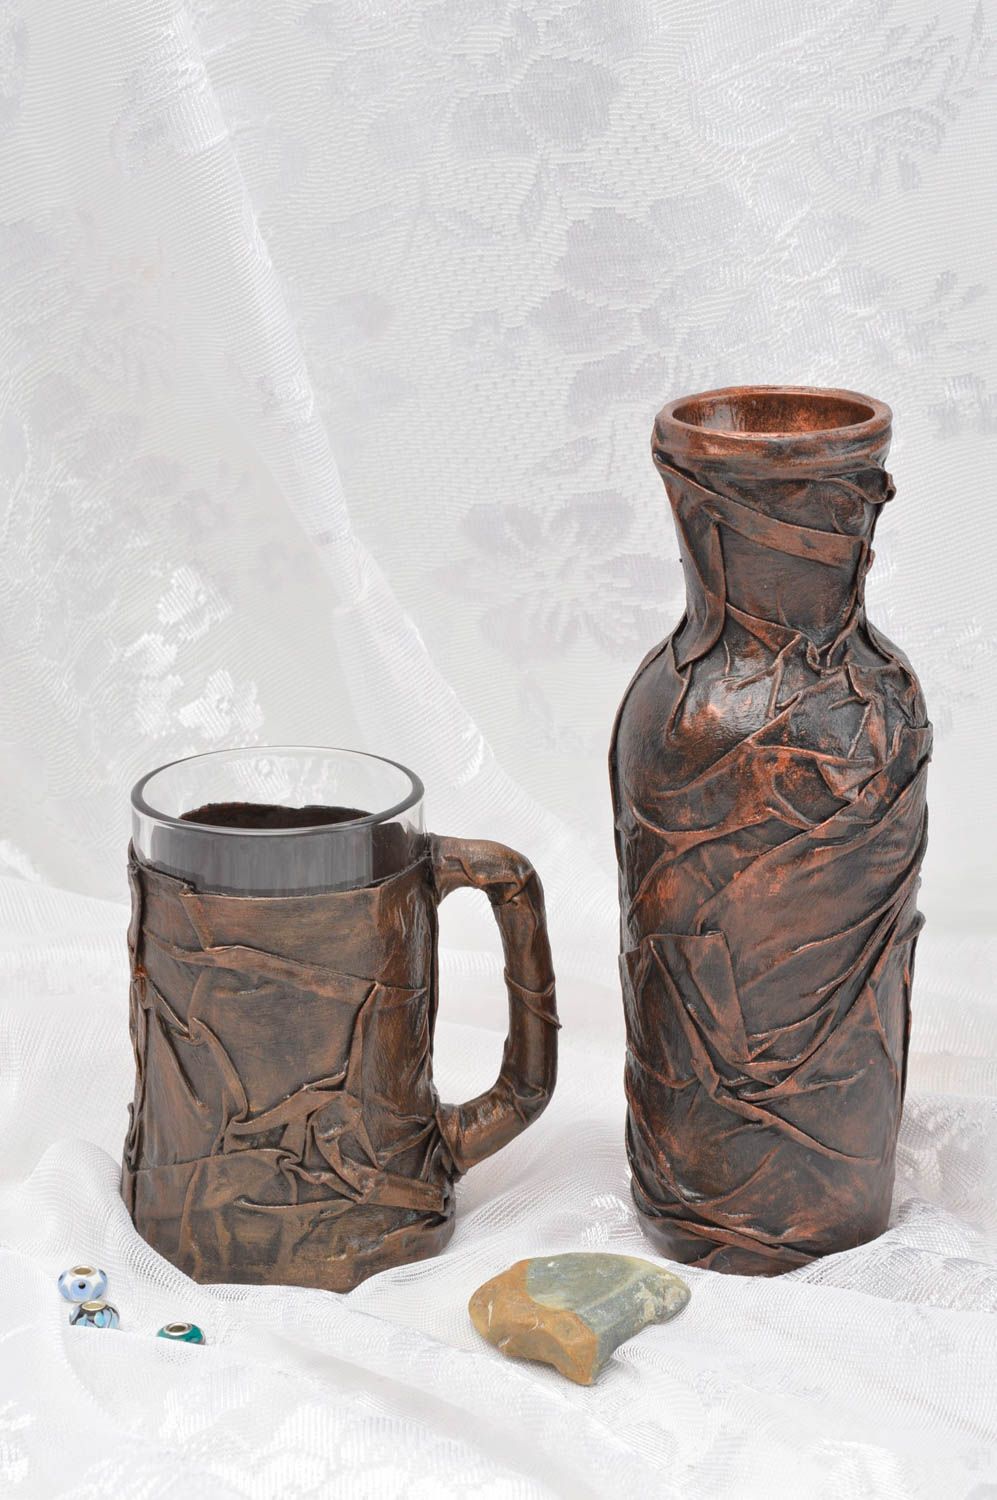 Glass mug handmade table decor vintage interior decor ideas decorative bottle photo 1